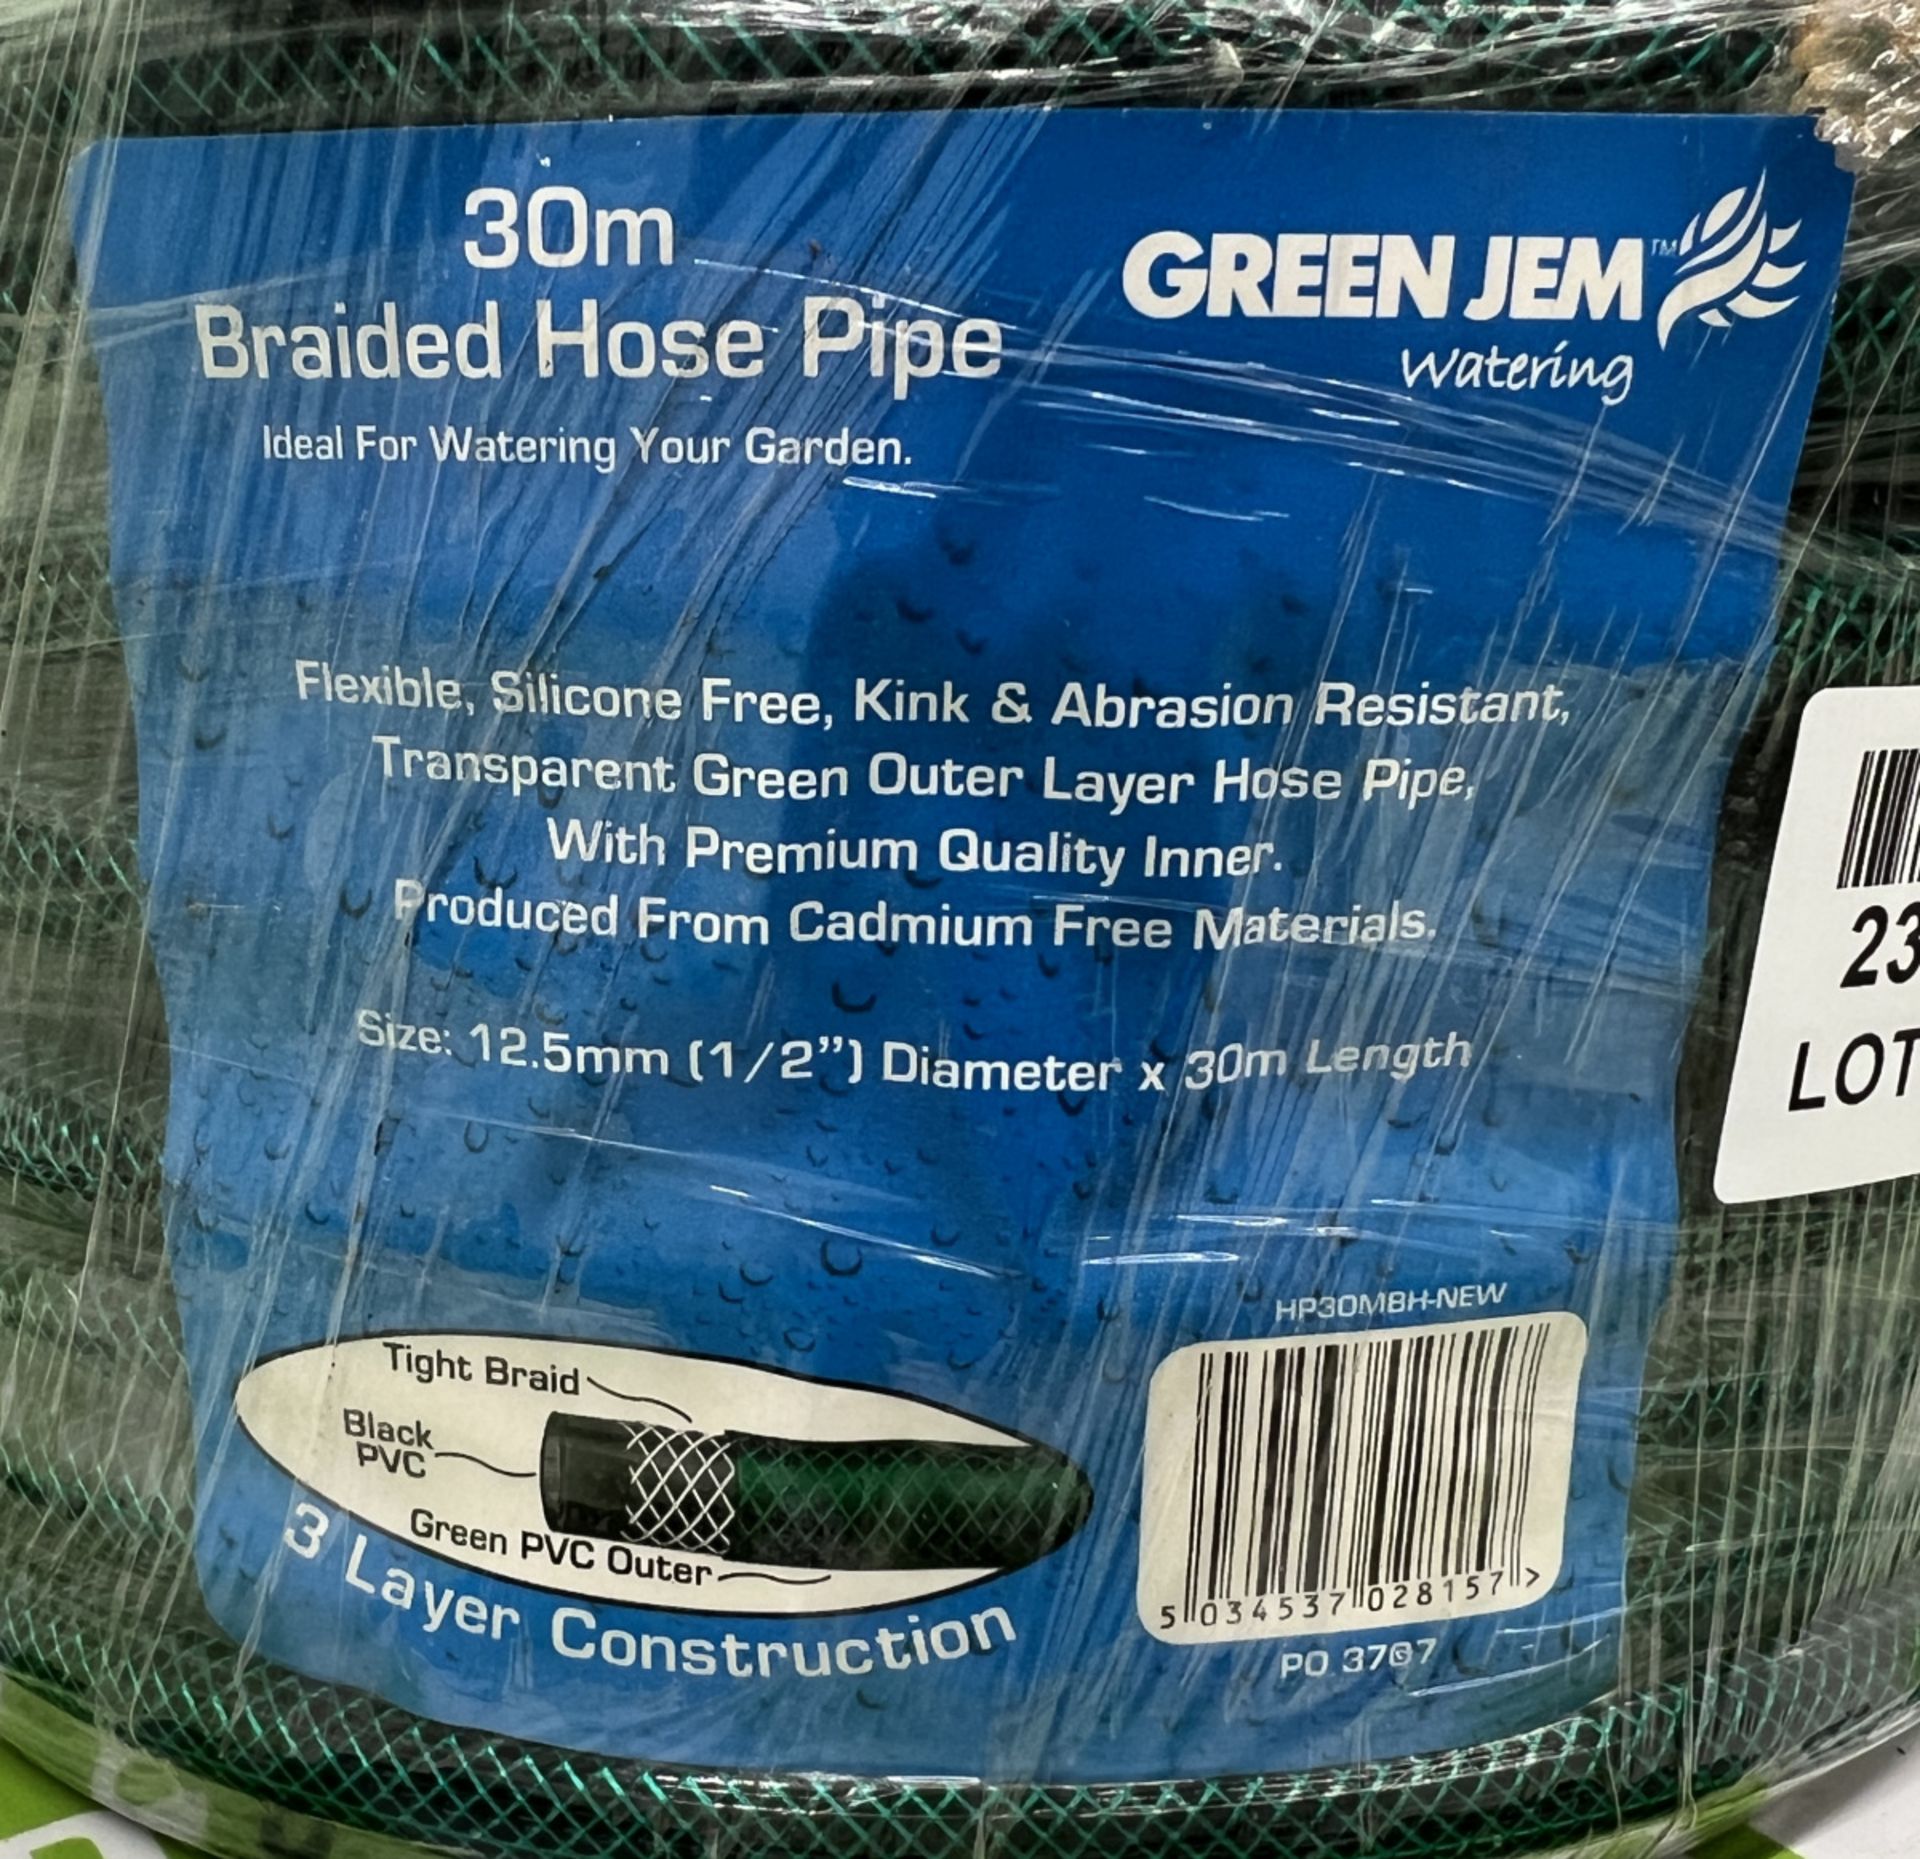 Green Jem 30m braided hose pipe reel - Image 2 of 3